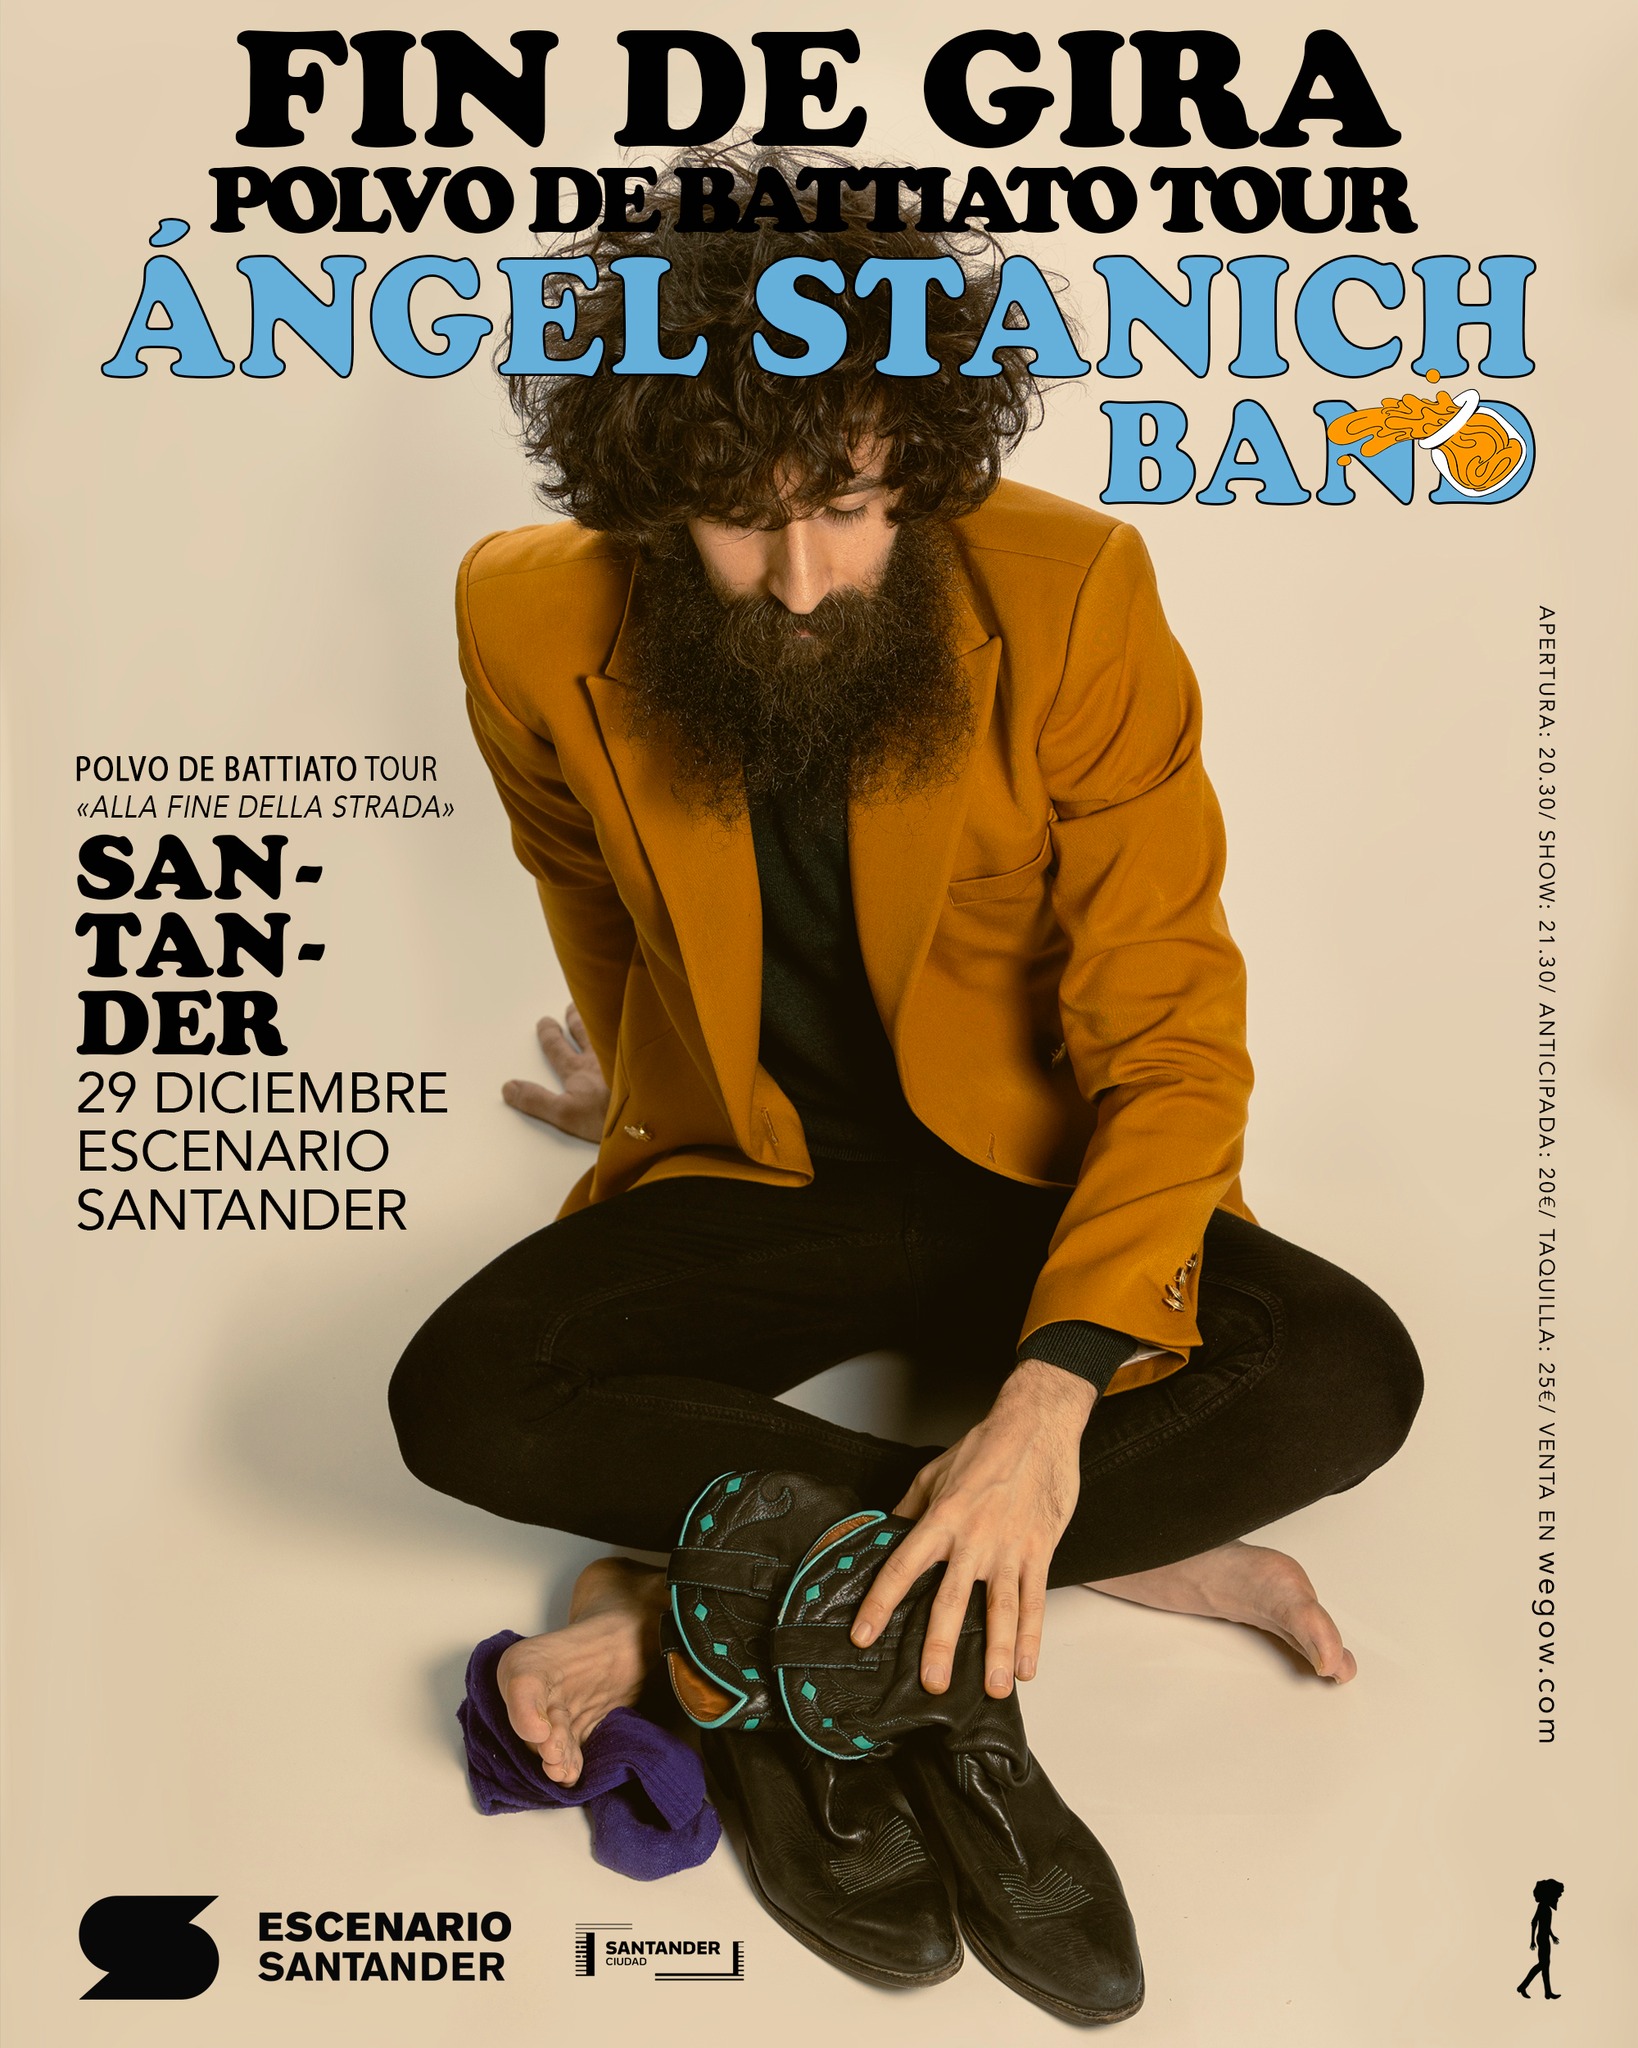 Ángel Stanich Band. Fin de gira Polvo de Battiato Tour - Santander  Creativa